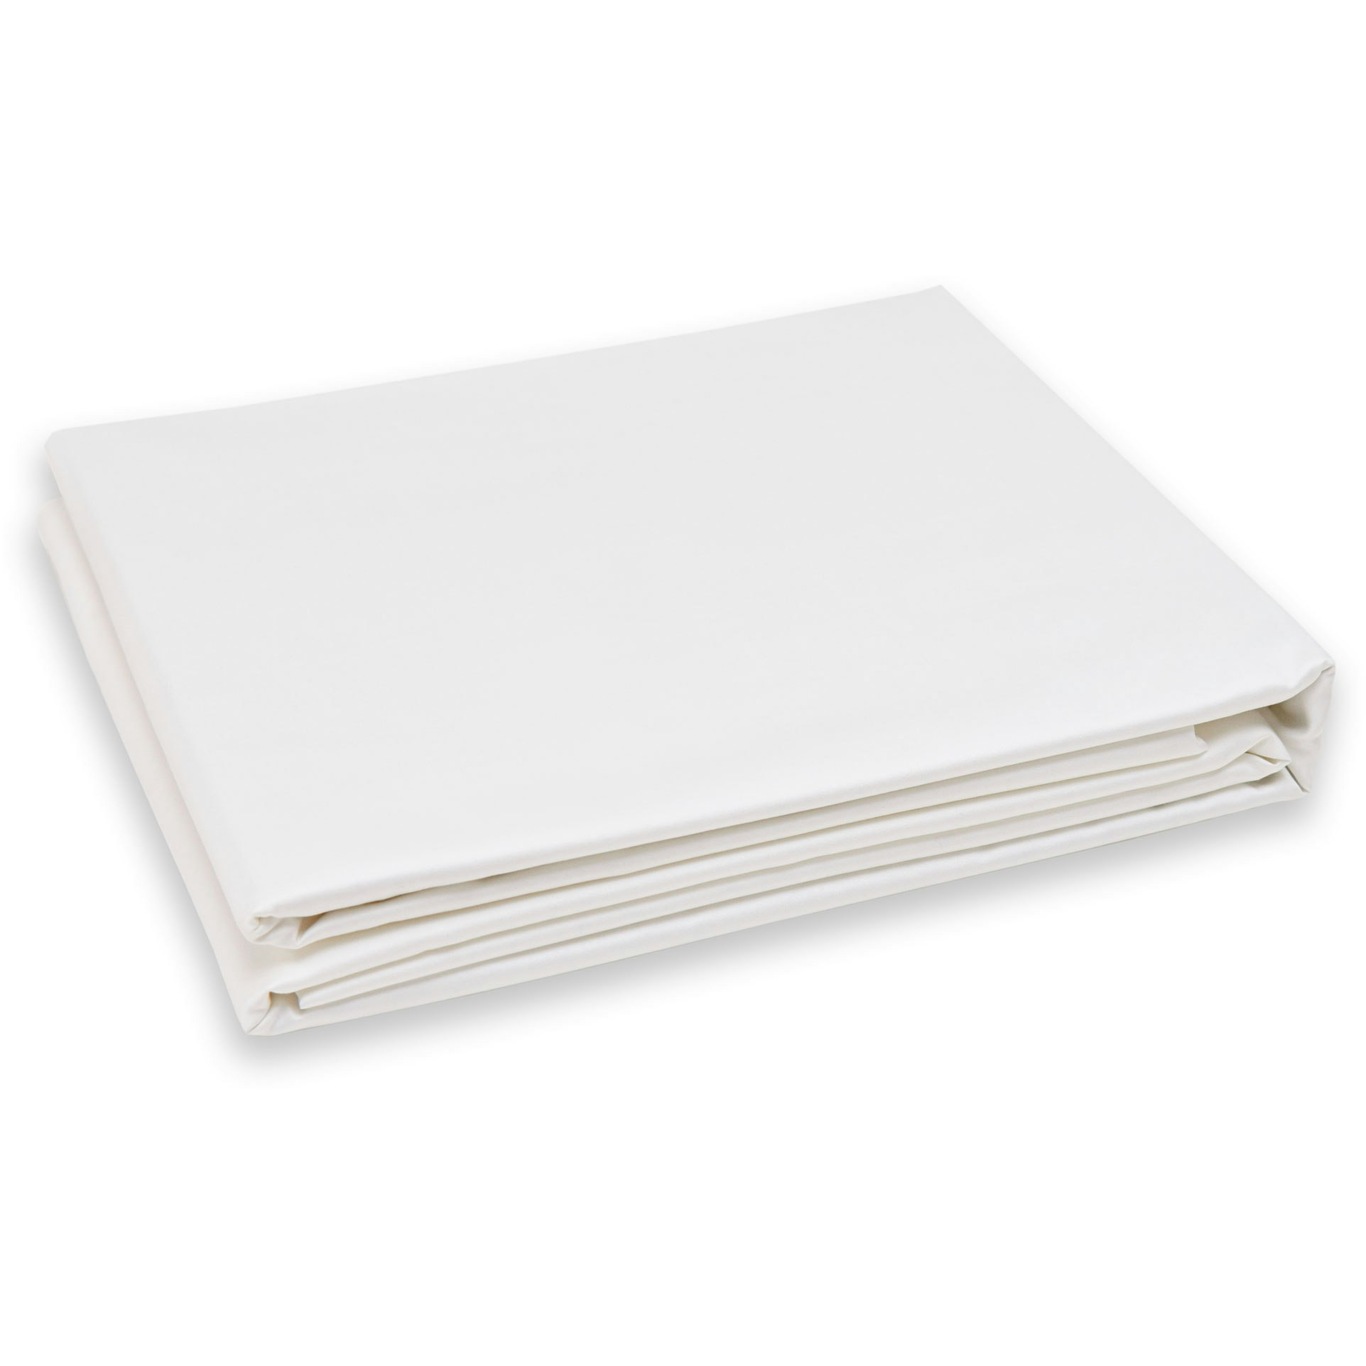 Shade Sheet Crisp White, 180x270 cm